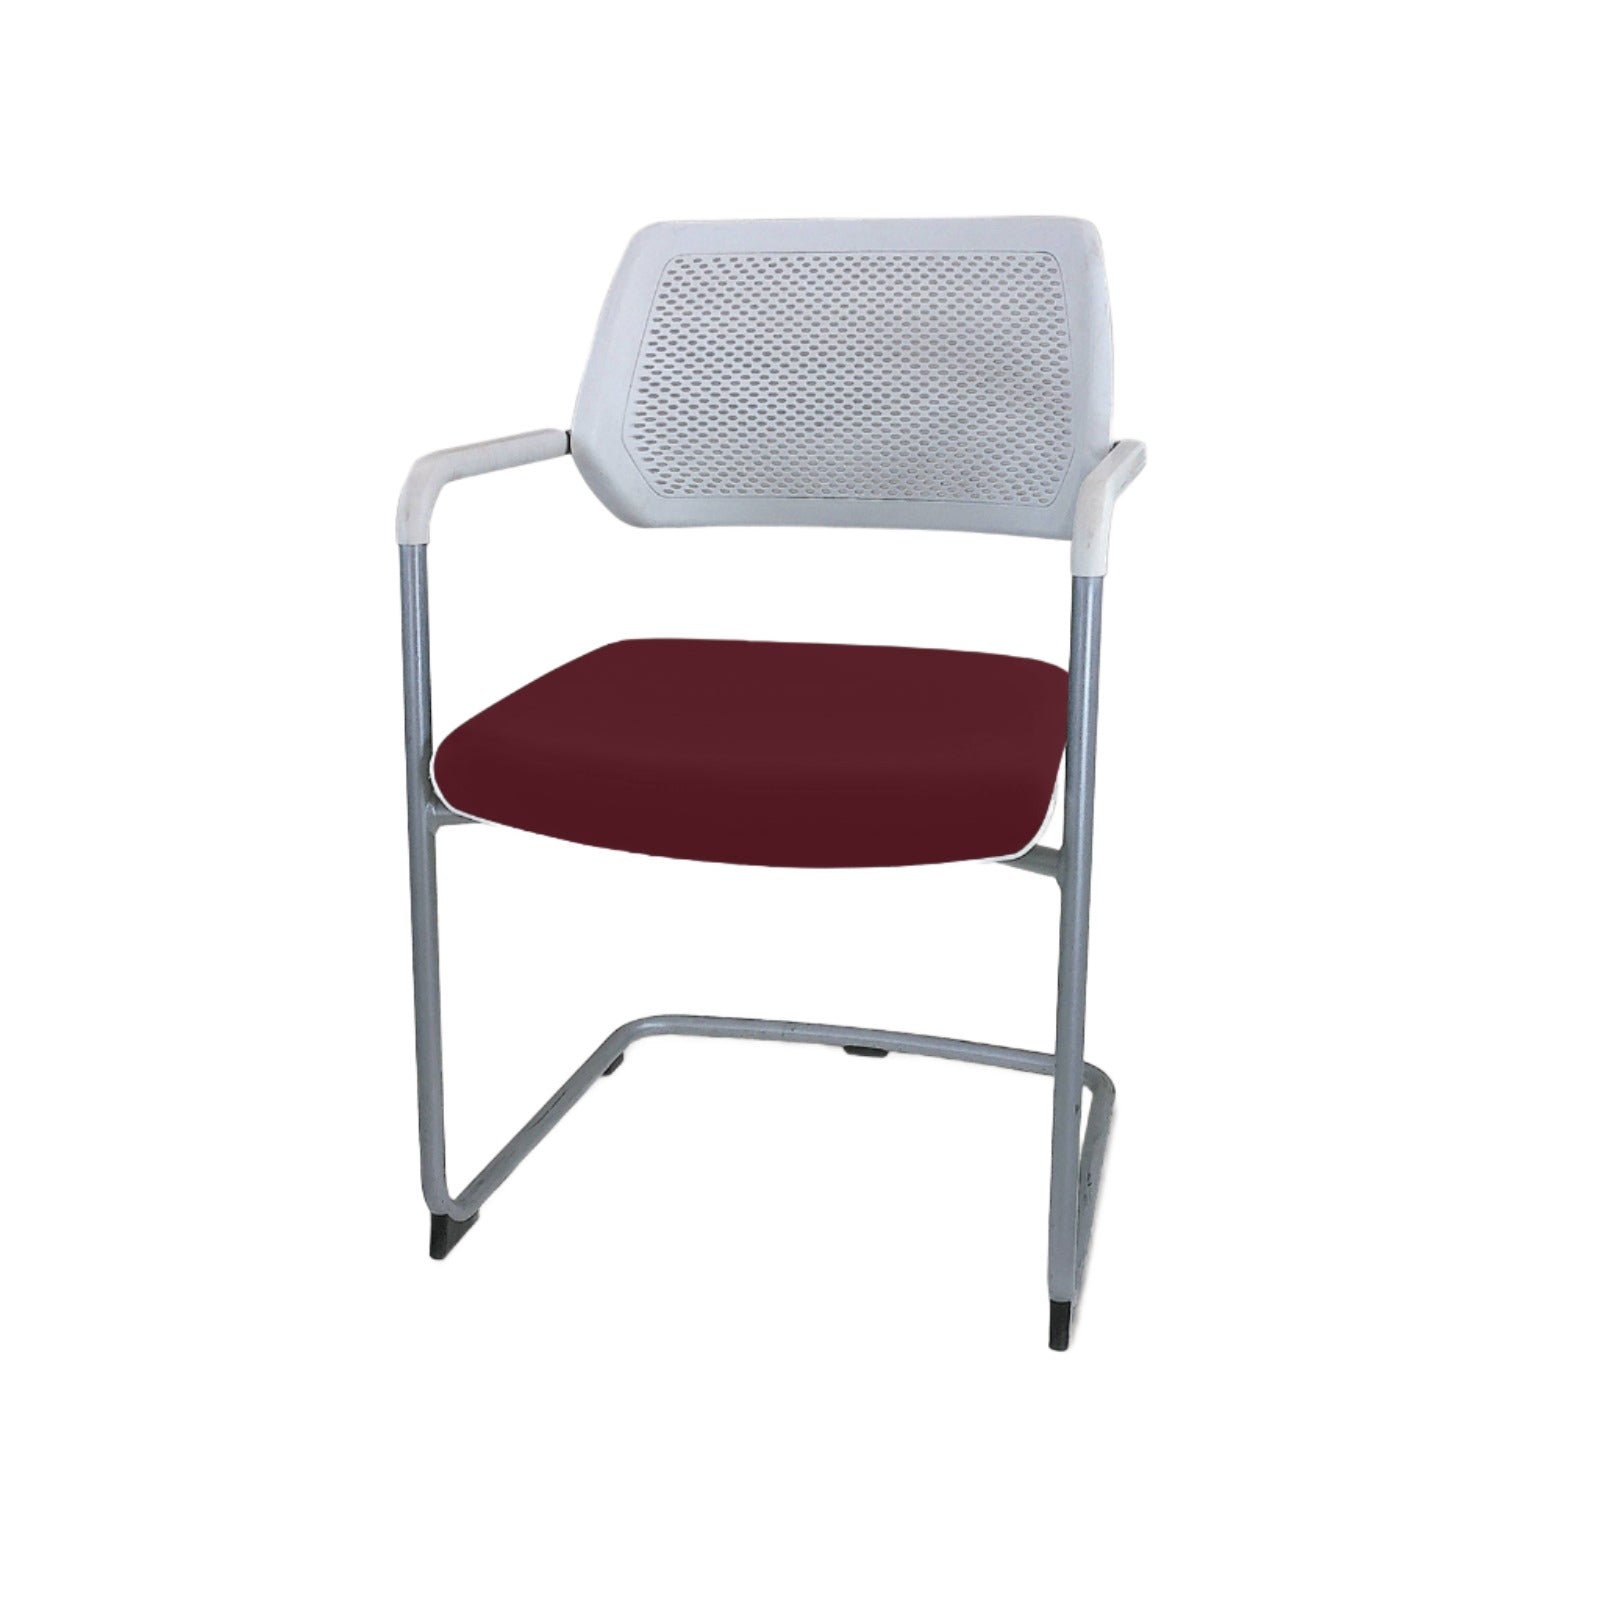 Steelcase: Qivi - Sled Base Meeting Chair - Refurbished